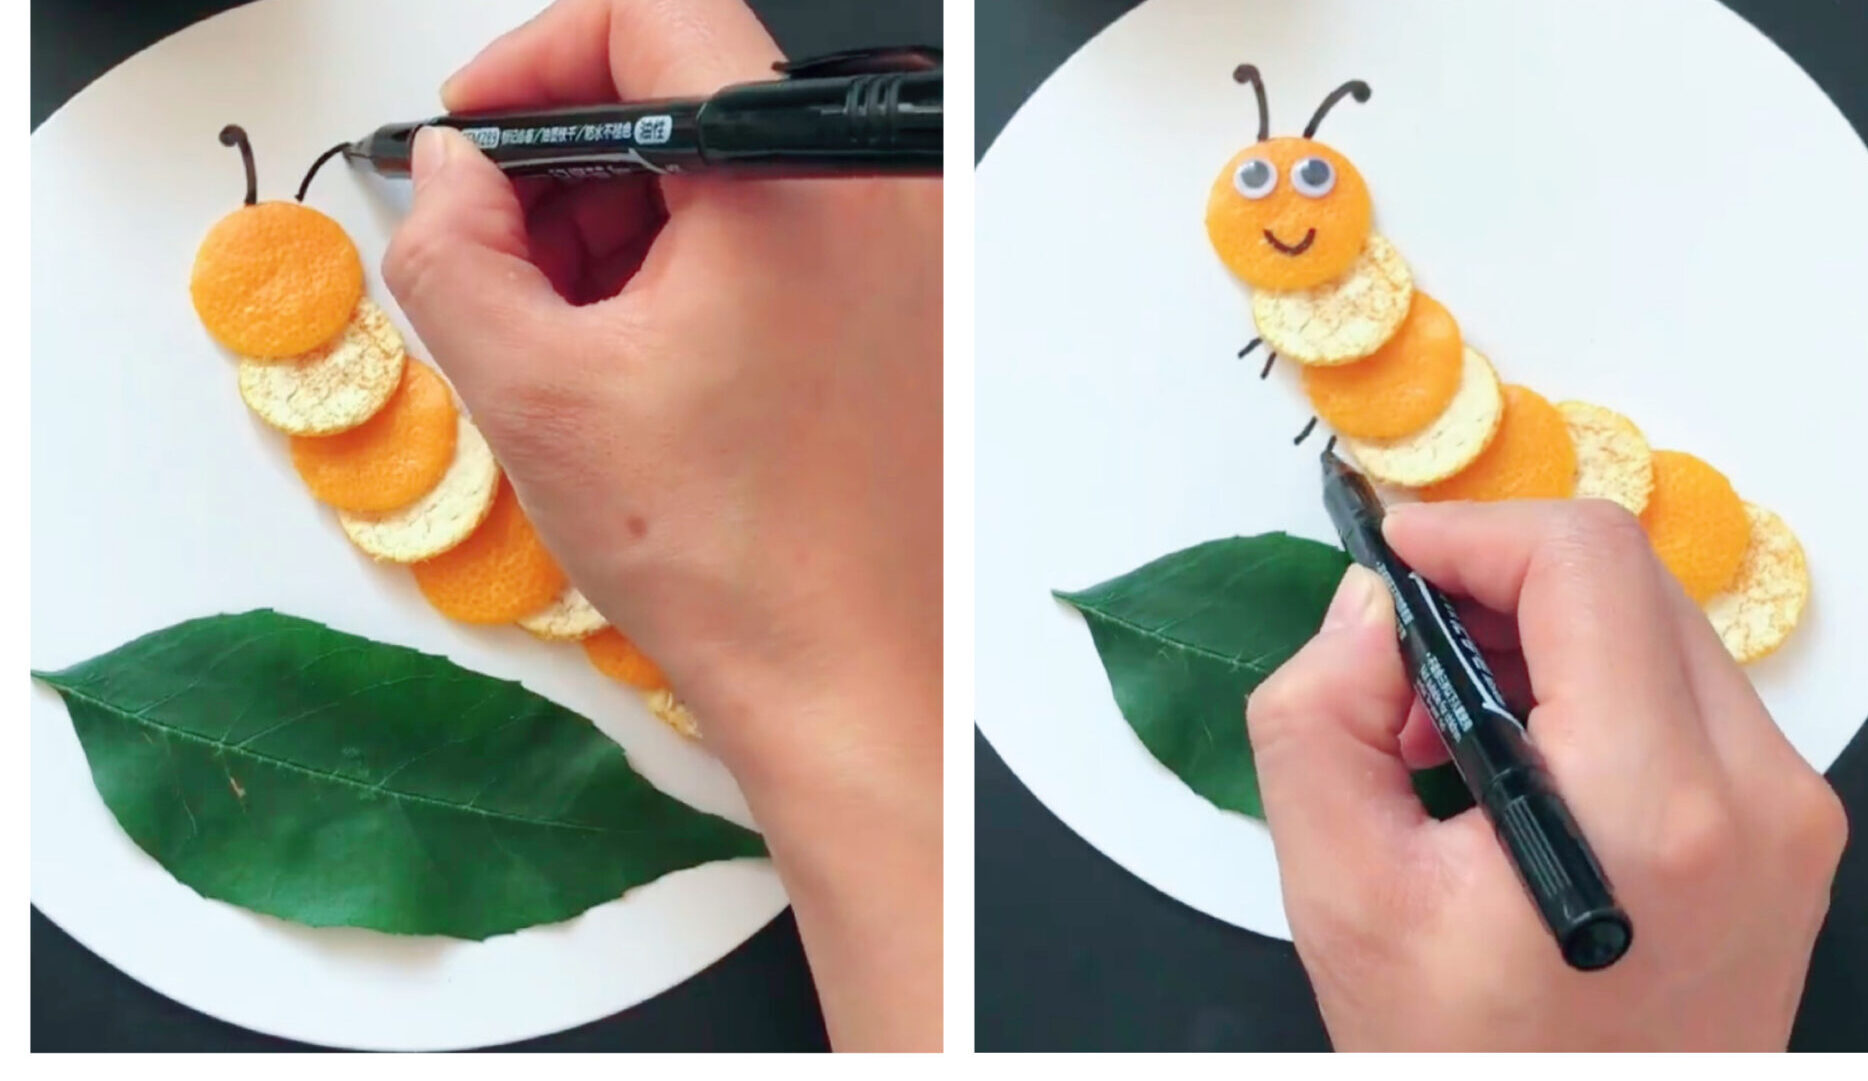 How to DIY Cute Caterpillar with Orang Peel